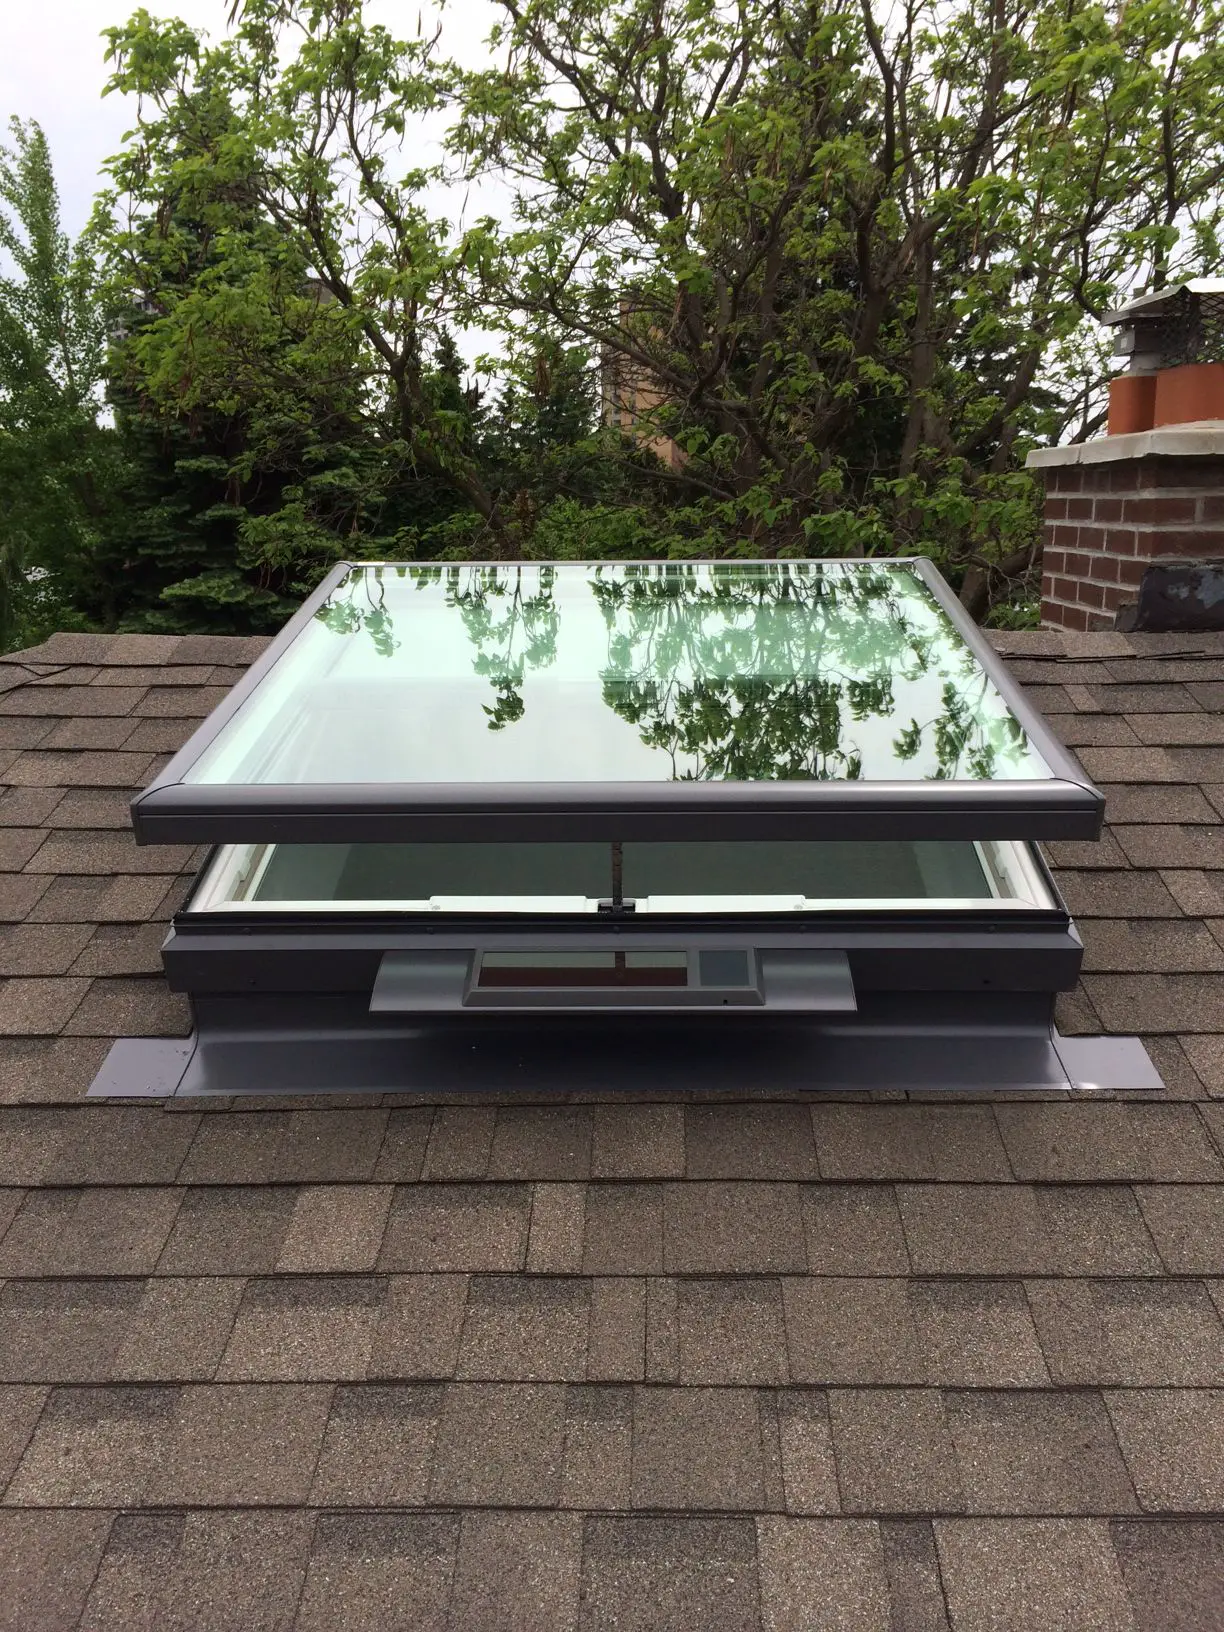 VELUX solar powered skylight installed by The RenoSense ...